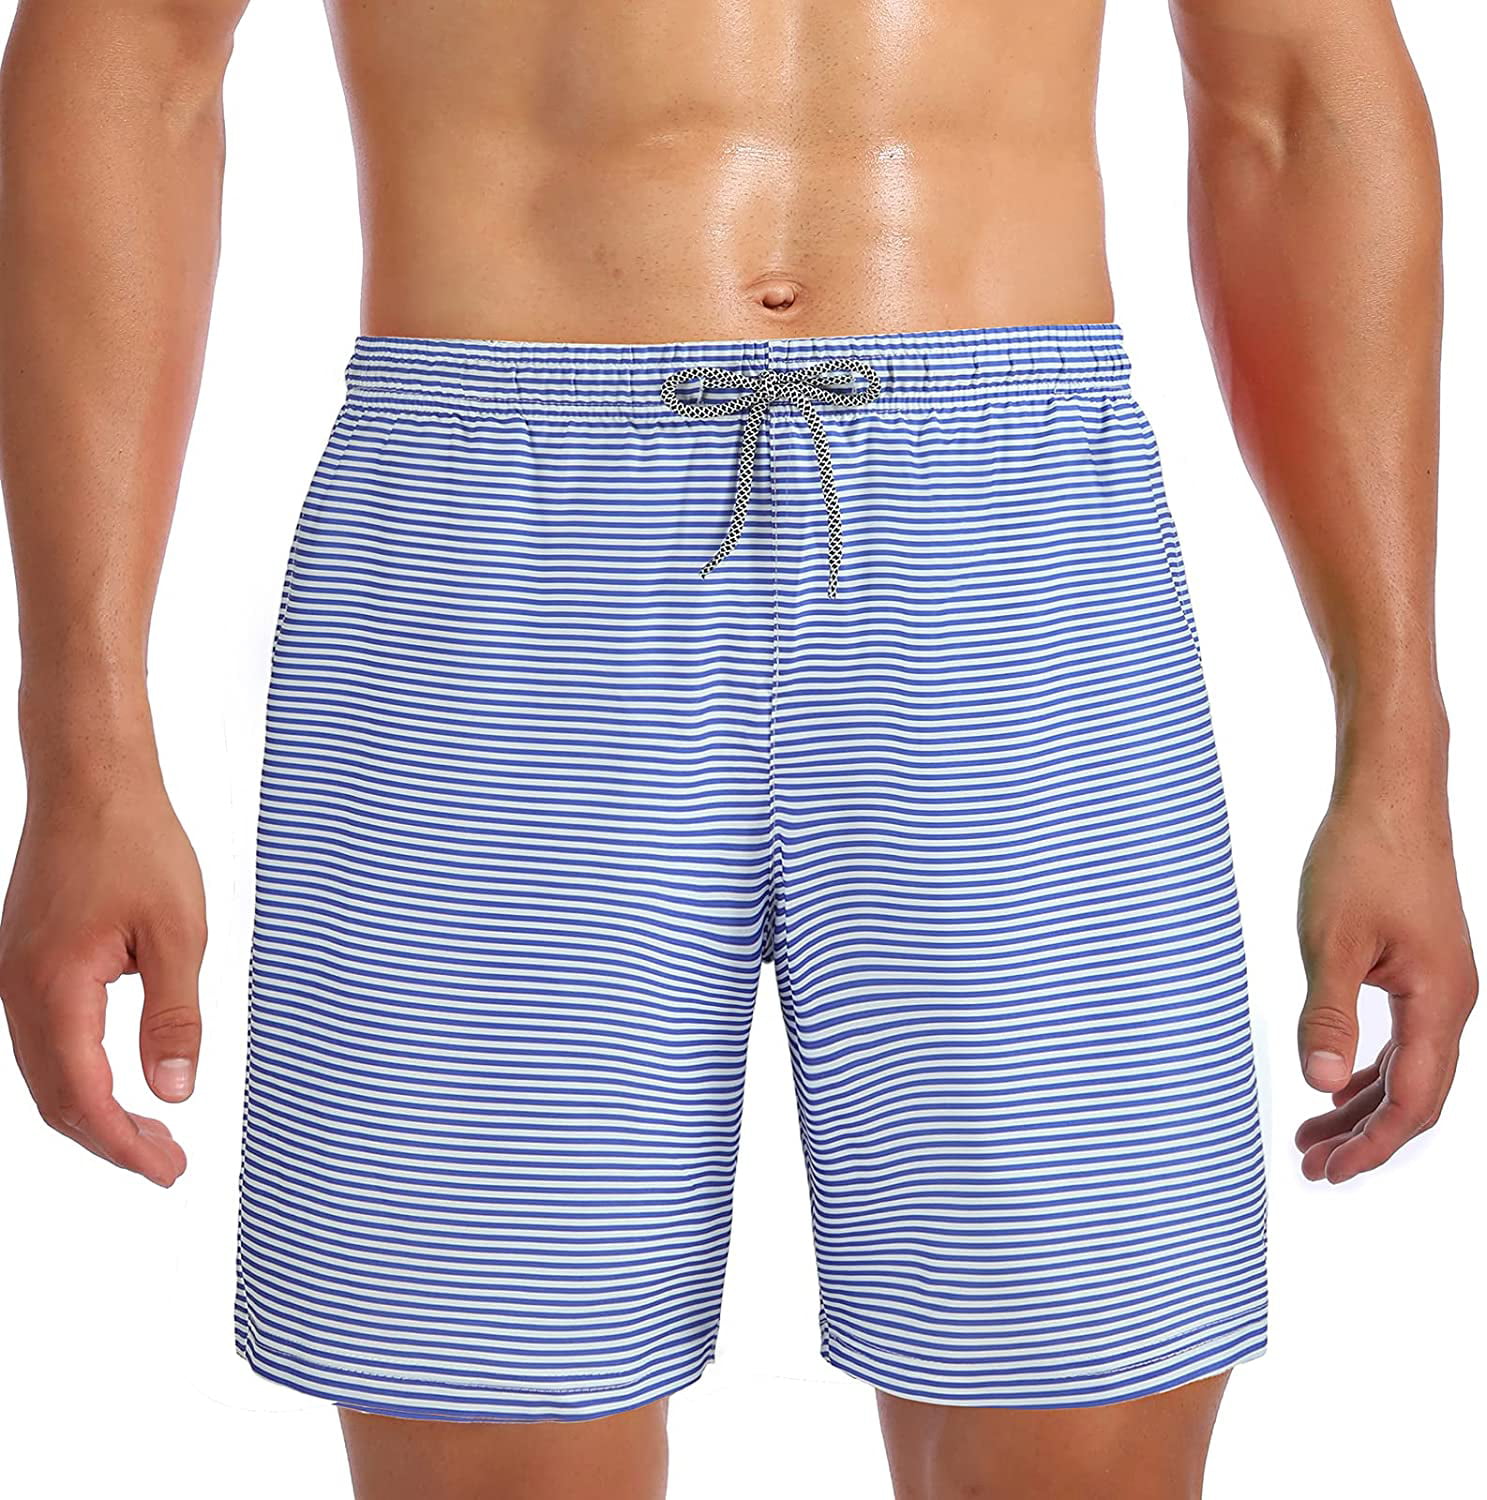 Biwisy Mens Swim Trunks Quick Dry Swim Shorts Mesh Lining Swimwear Bathing Suits with Pockets